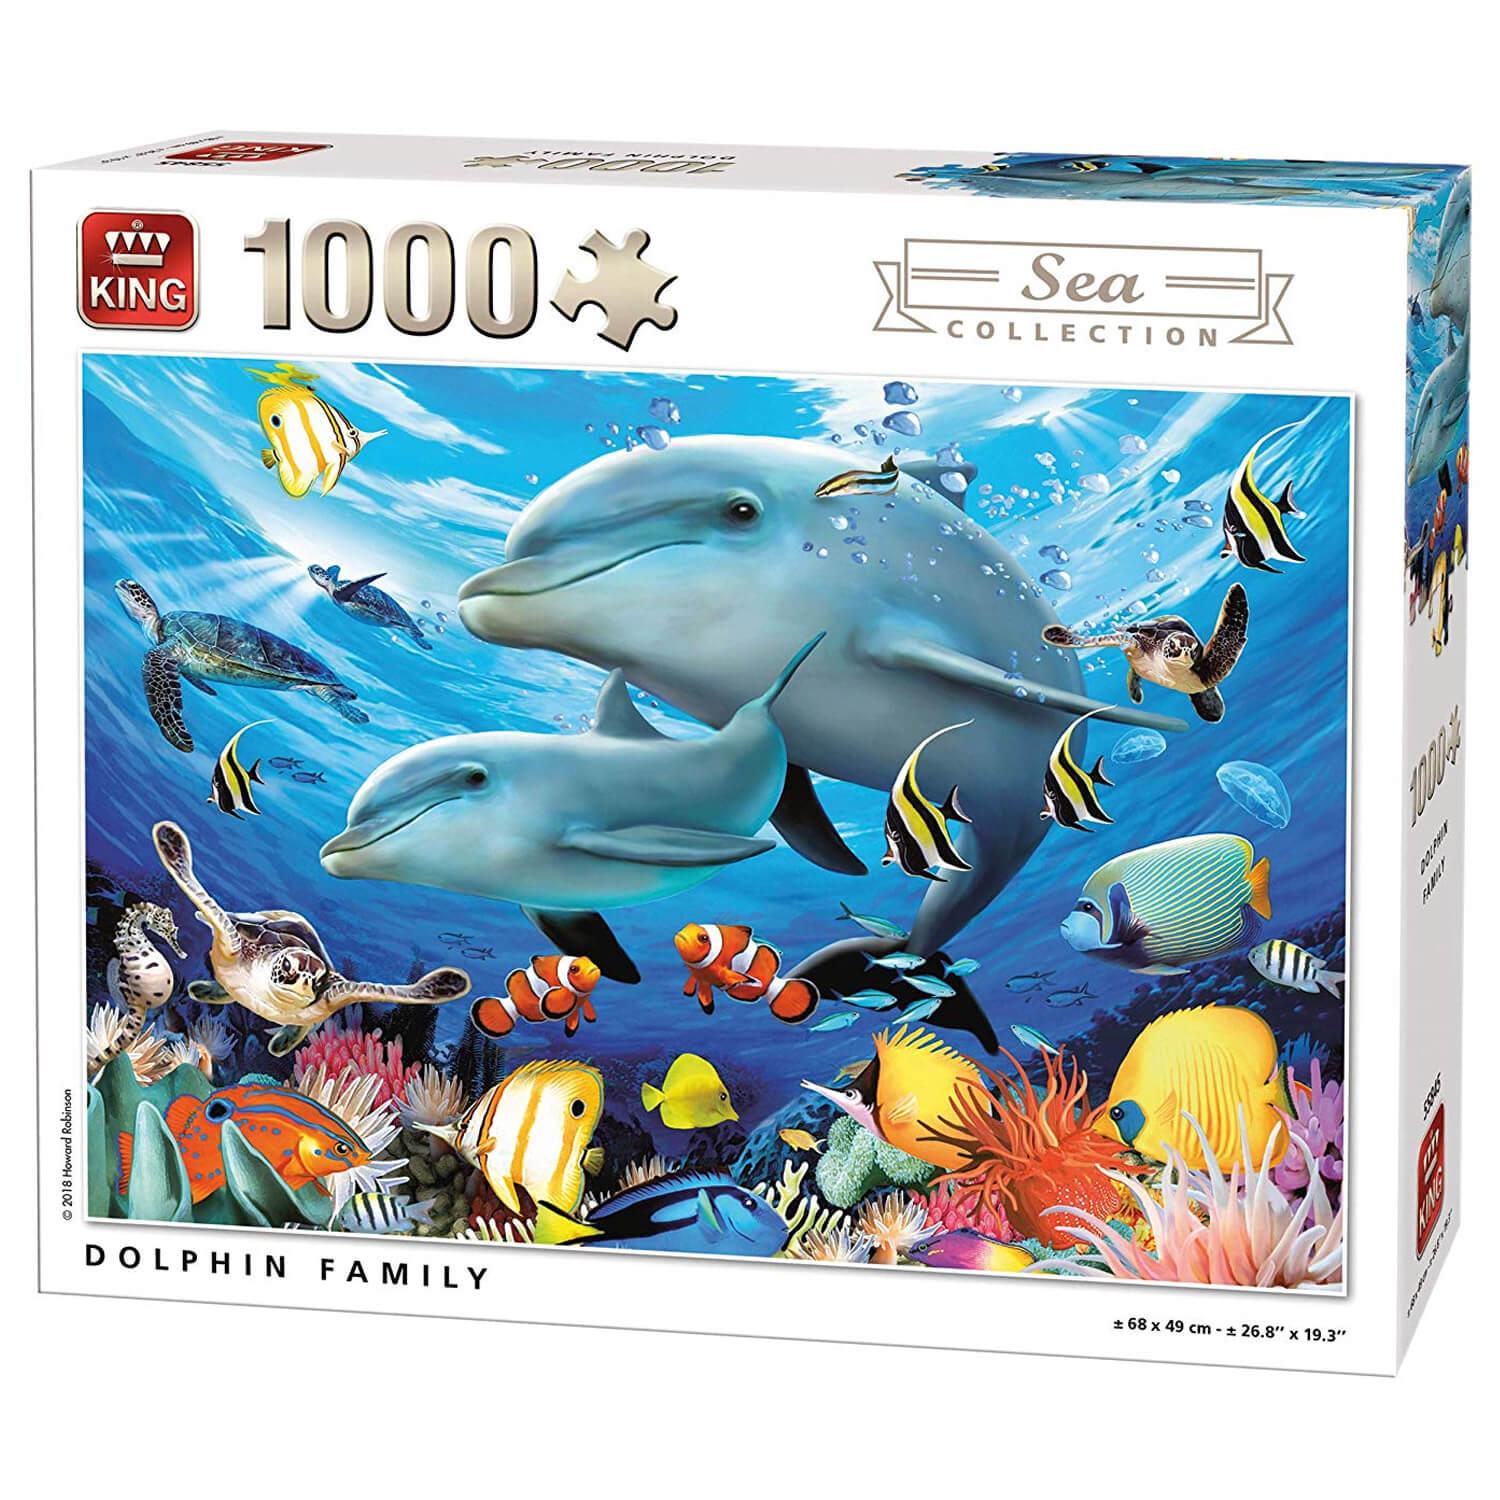 Sea collection. Пазл Дельфин. Пазлы дельфины. Пазлы с дельфинами 1000. Пазлы 1000 штук.